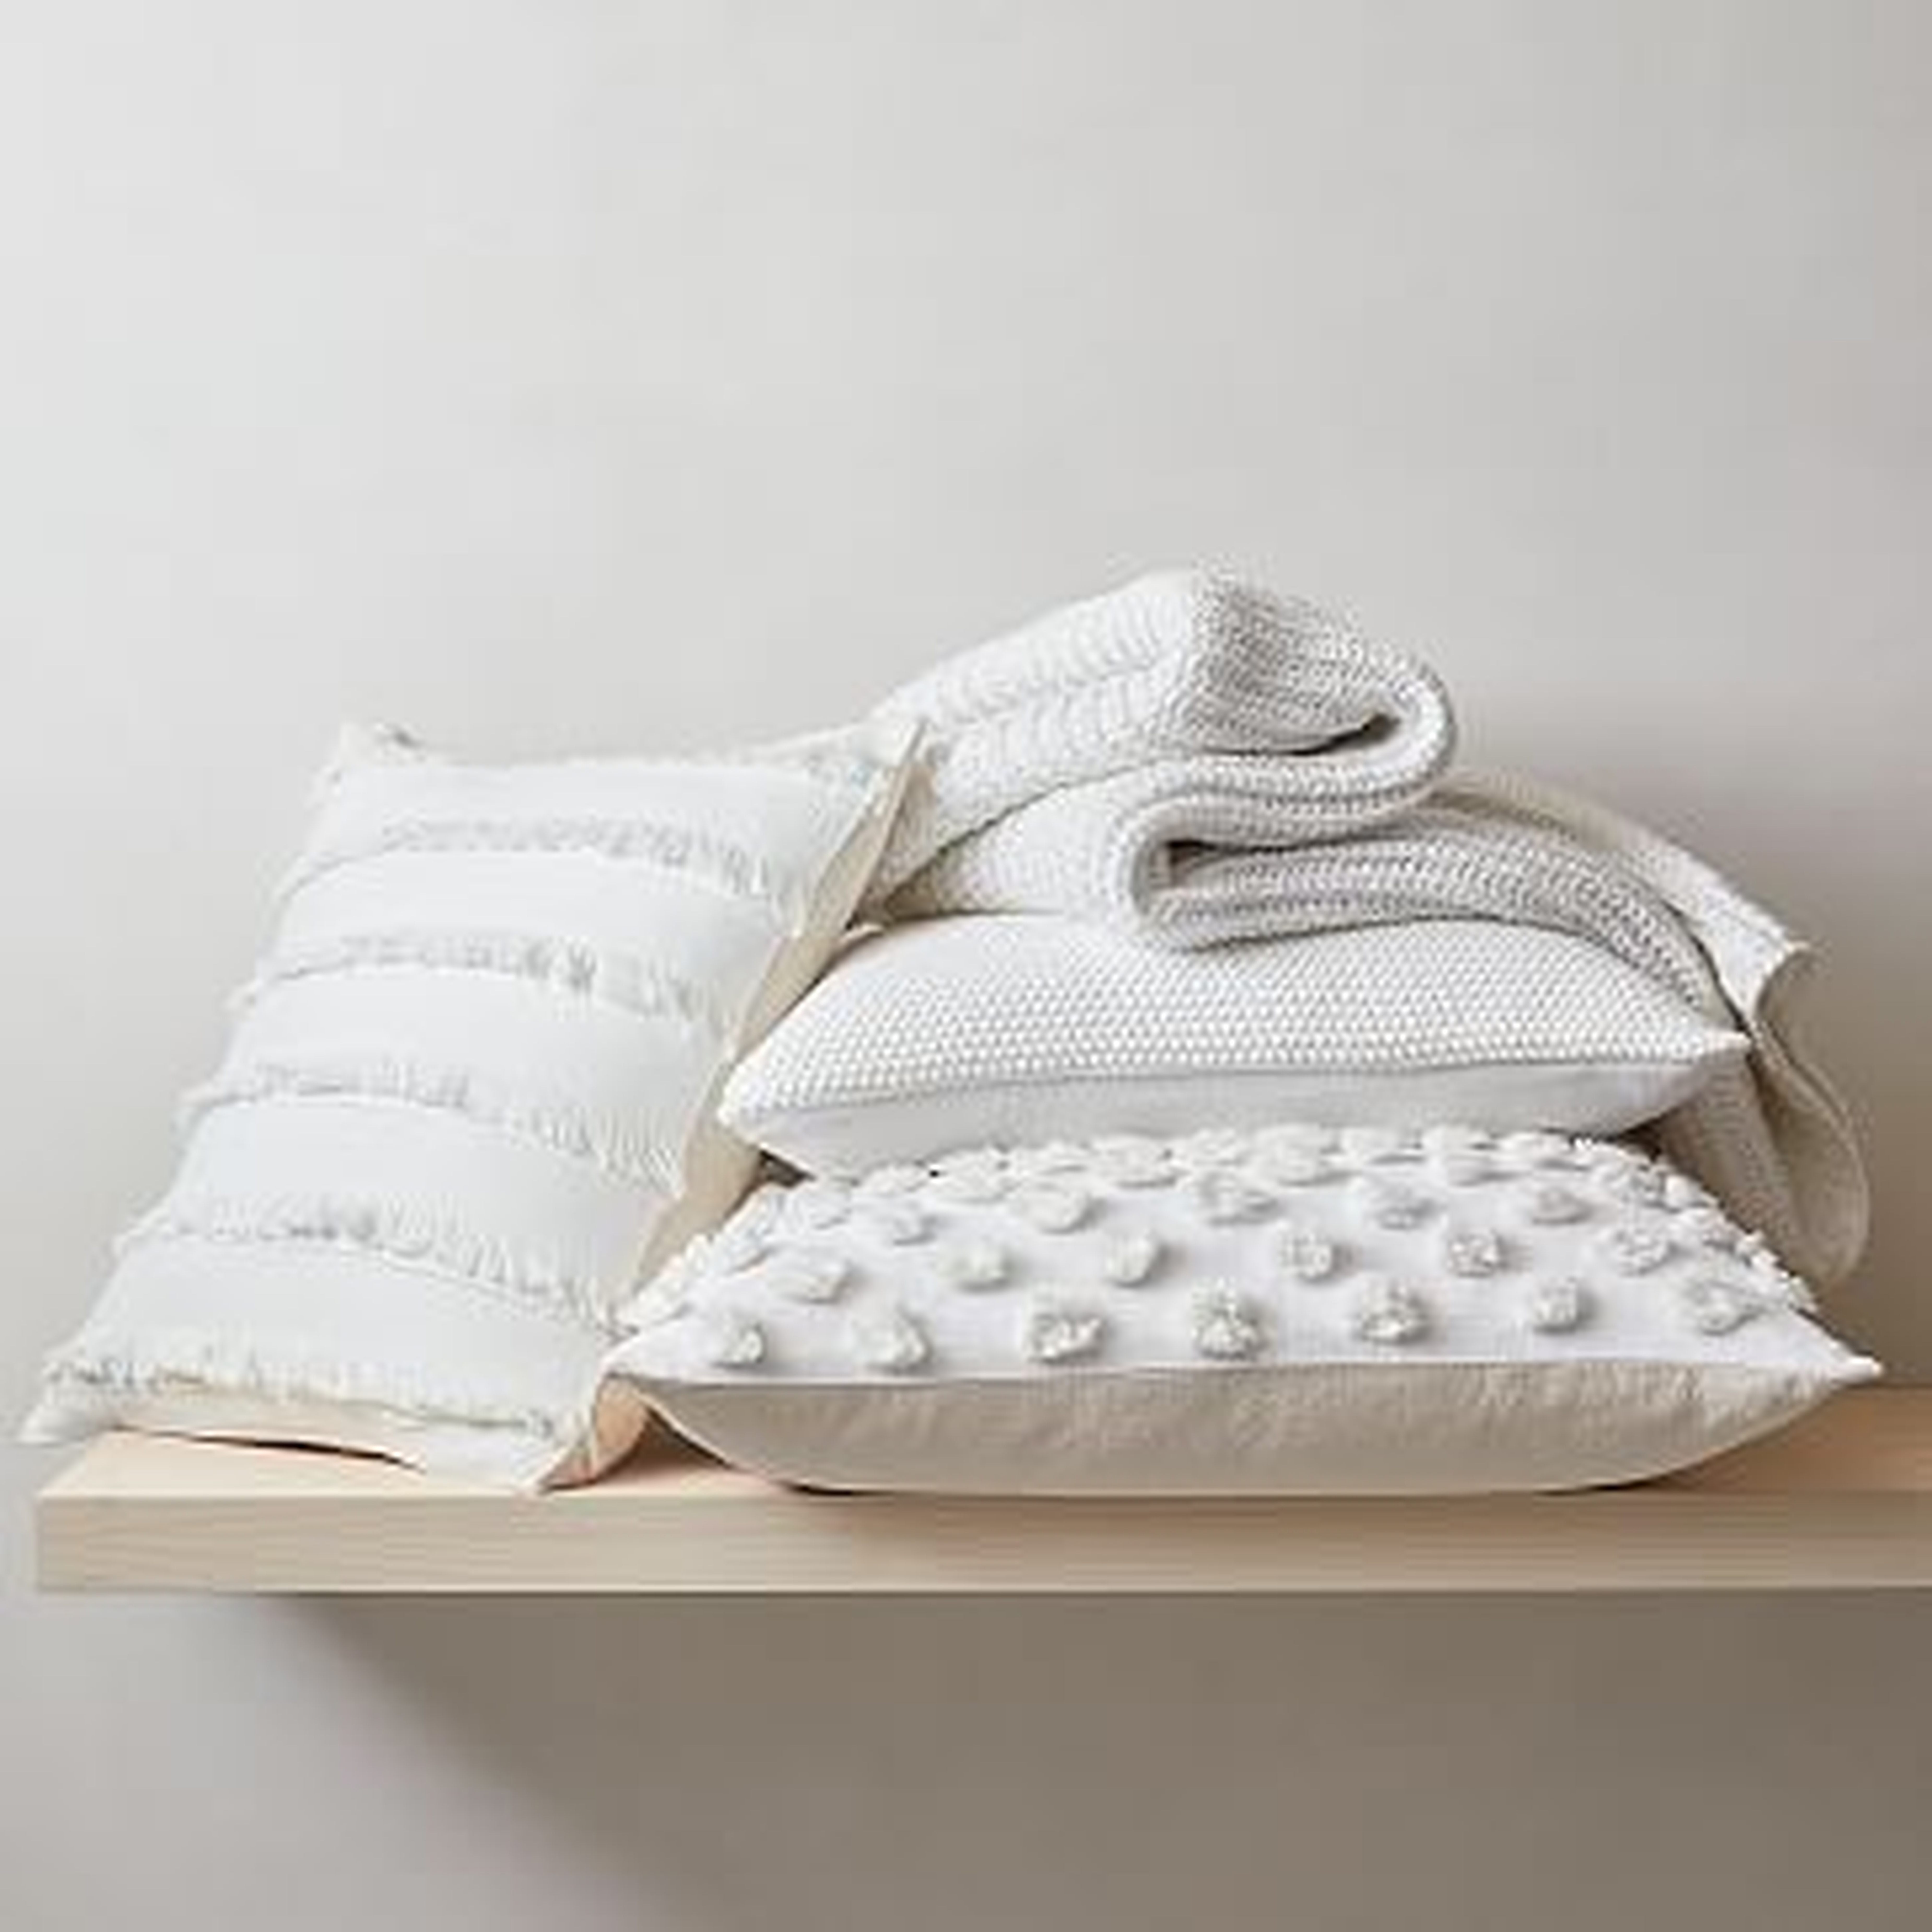 Richly Textured Whites Pillow Set - West Elm